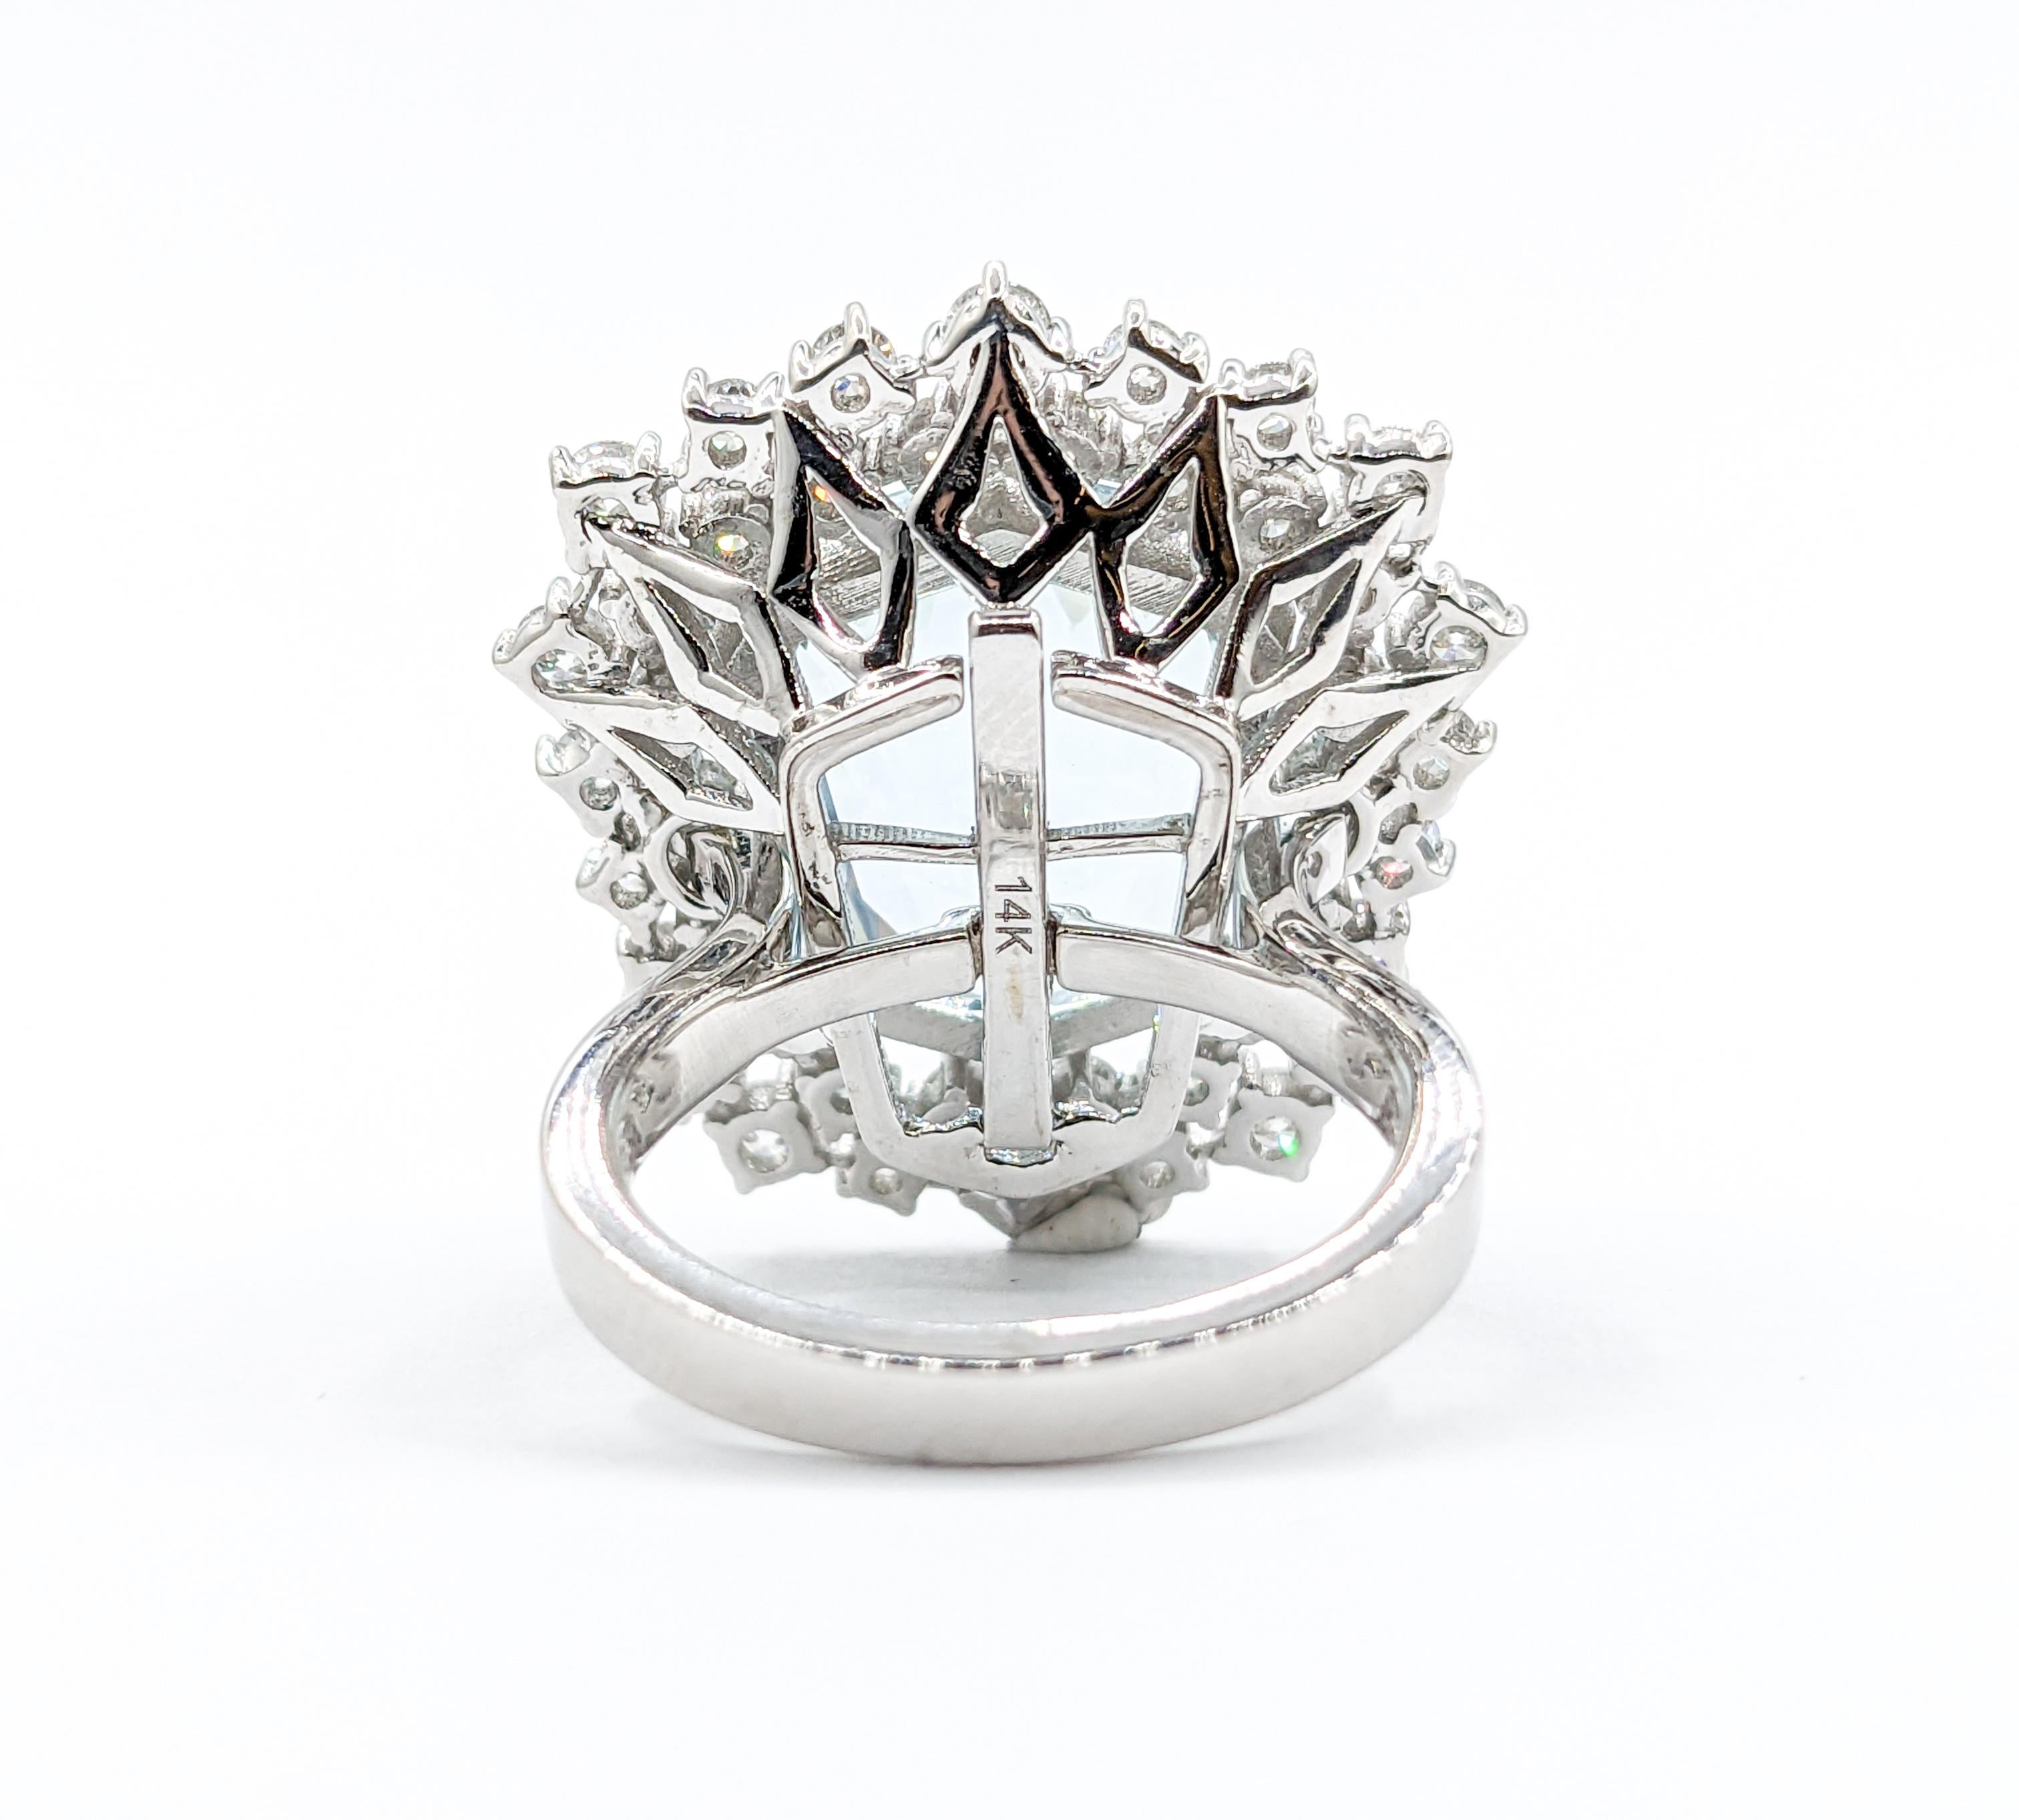 16ct Aquamarine & Diamond Convertible Ring Pendant For Sale 3